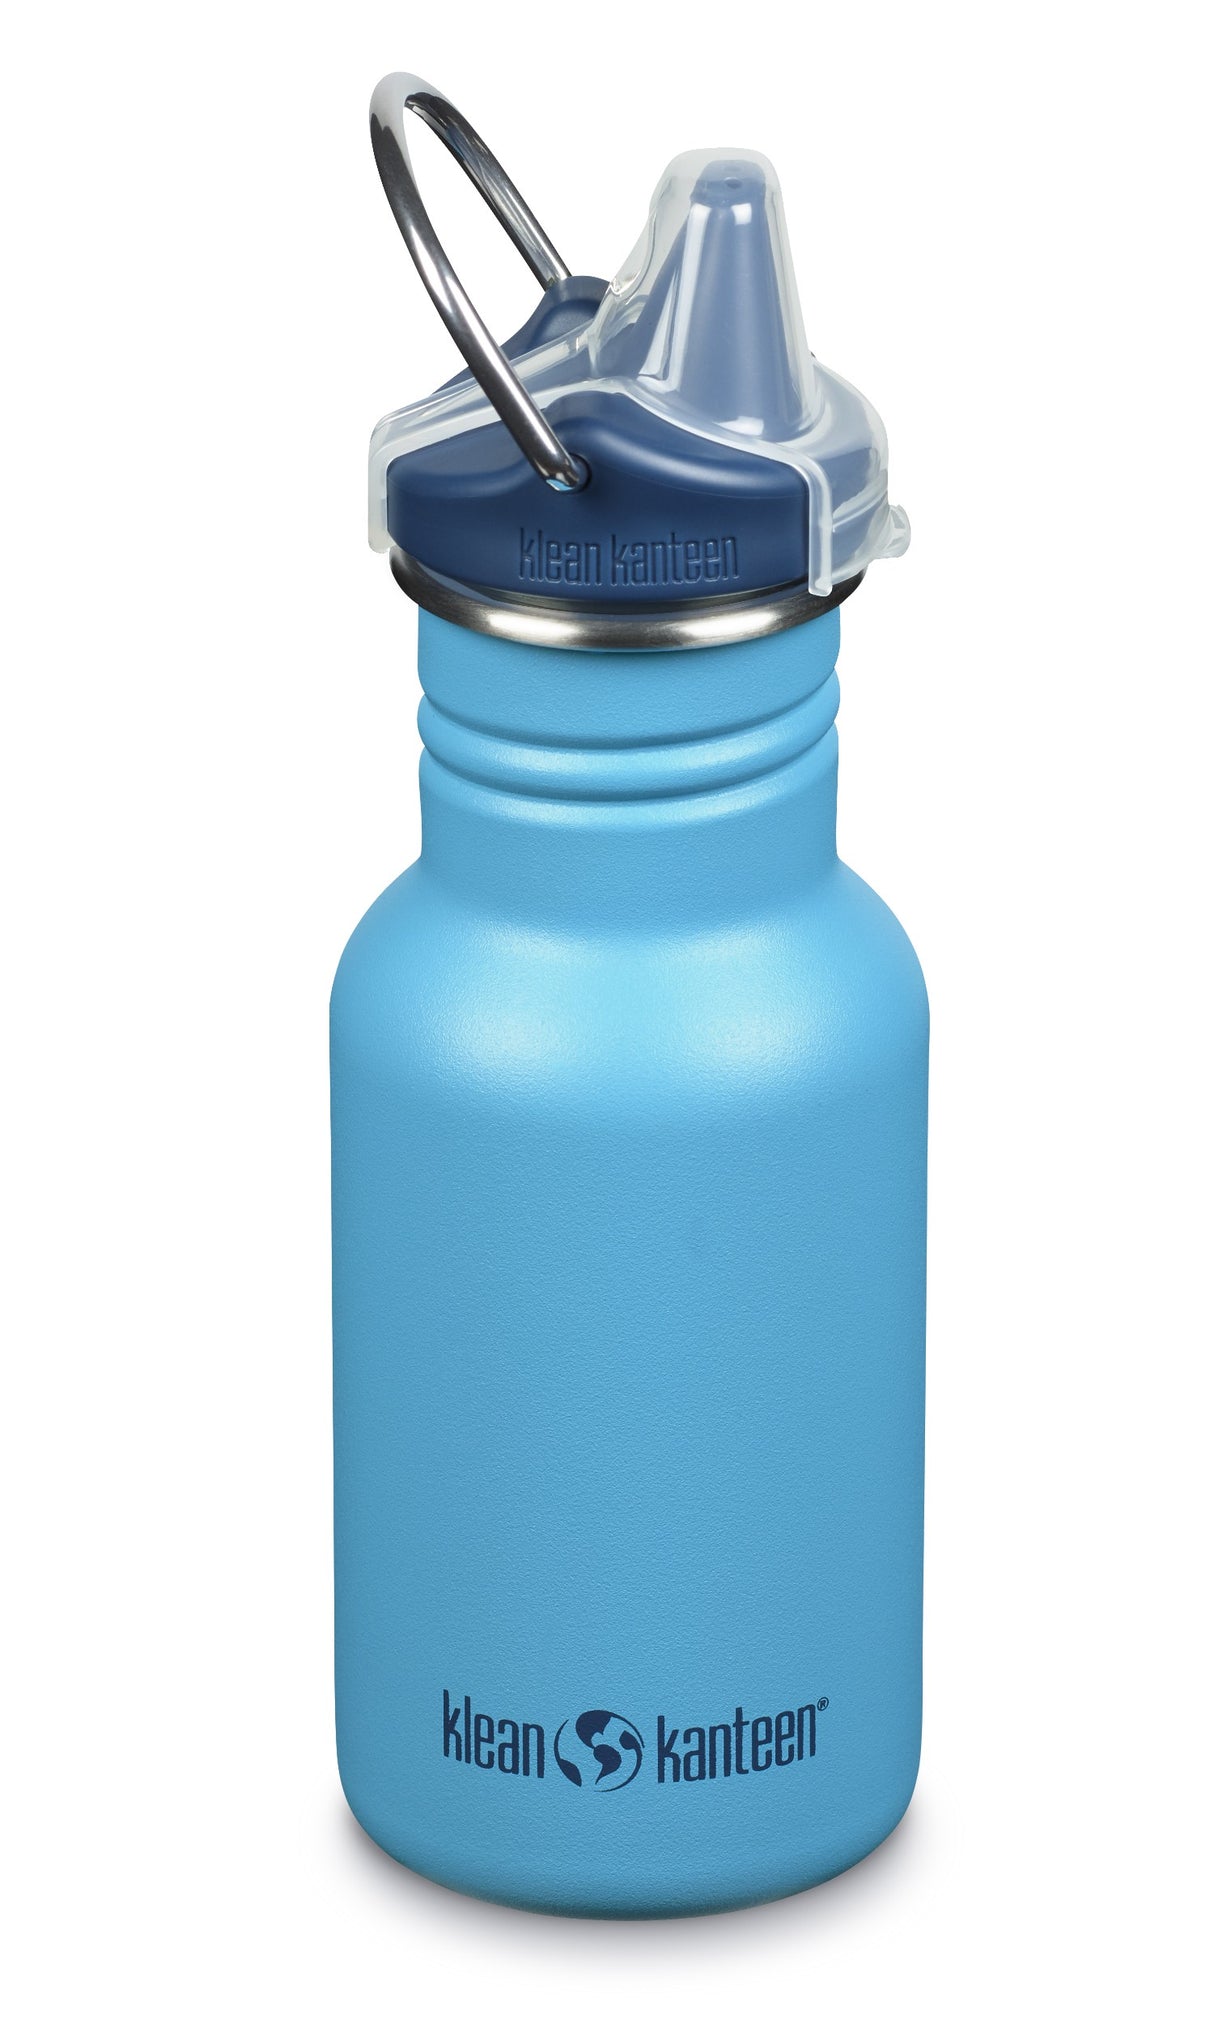 Blafre Borraccia in Acciaio Inox 300 ml, Prugna - Senza BPA né ftalati!  unisex (bambini)